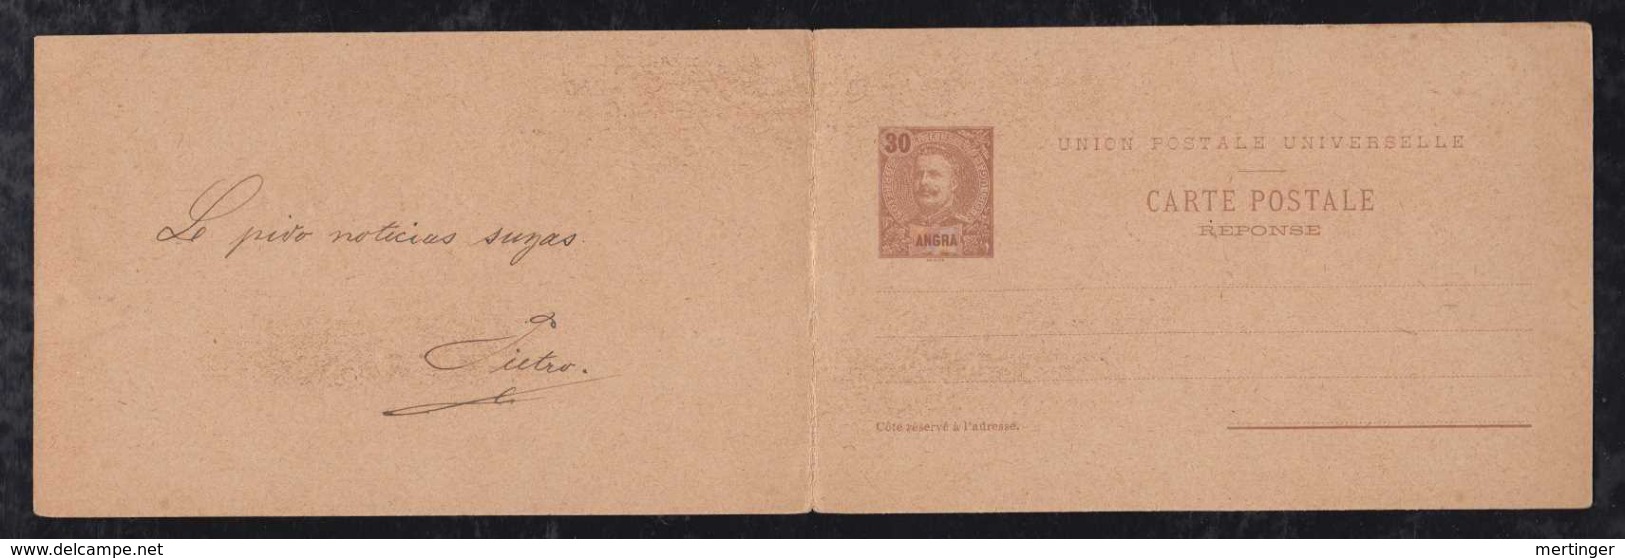 Portugal ANGRA 1897 Answer Reply Stationery Card To LEIPZIG Germany - Angra